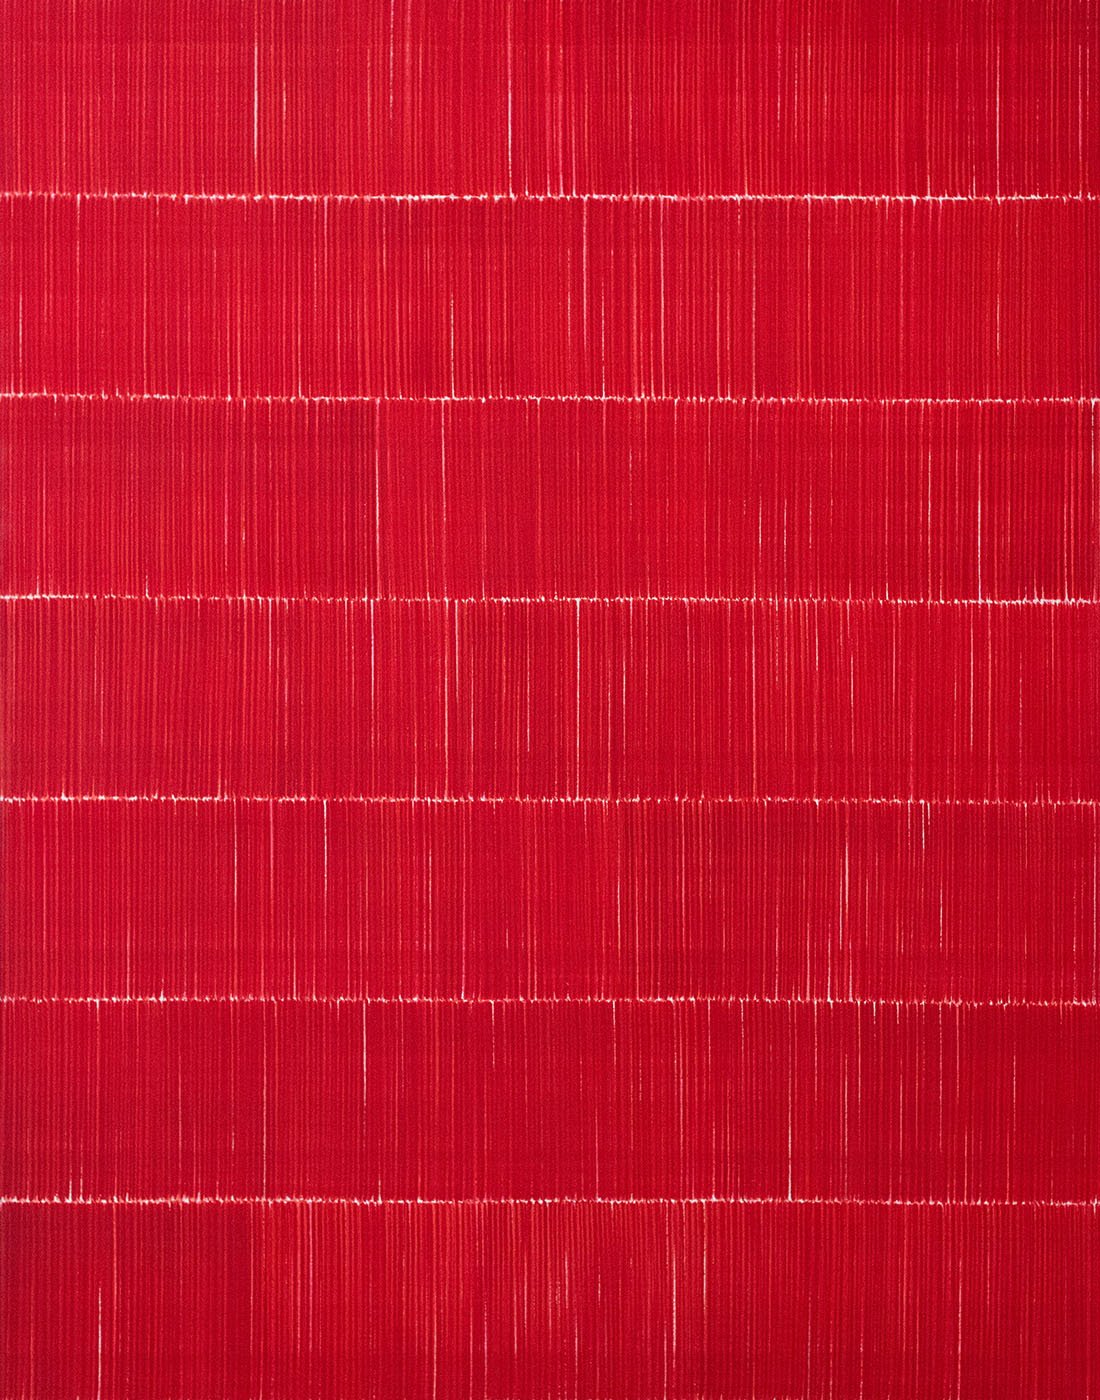 Nikola Dimitrov, KlangRaumRot VII, 2020, Pigmente, Bindemittel auf Leinwand, 140 x 110 cm